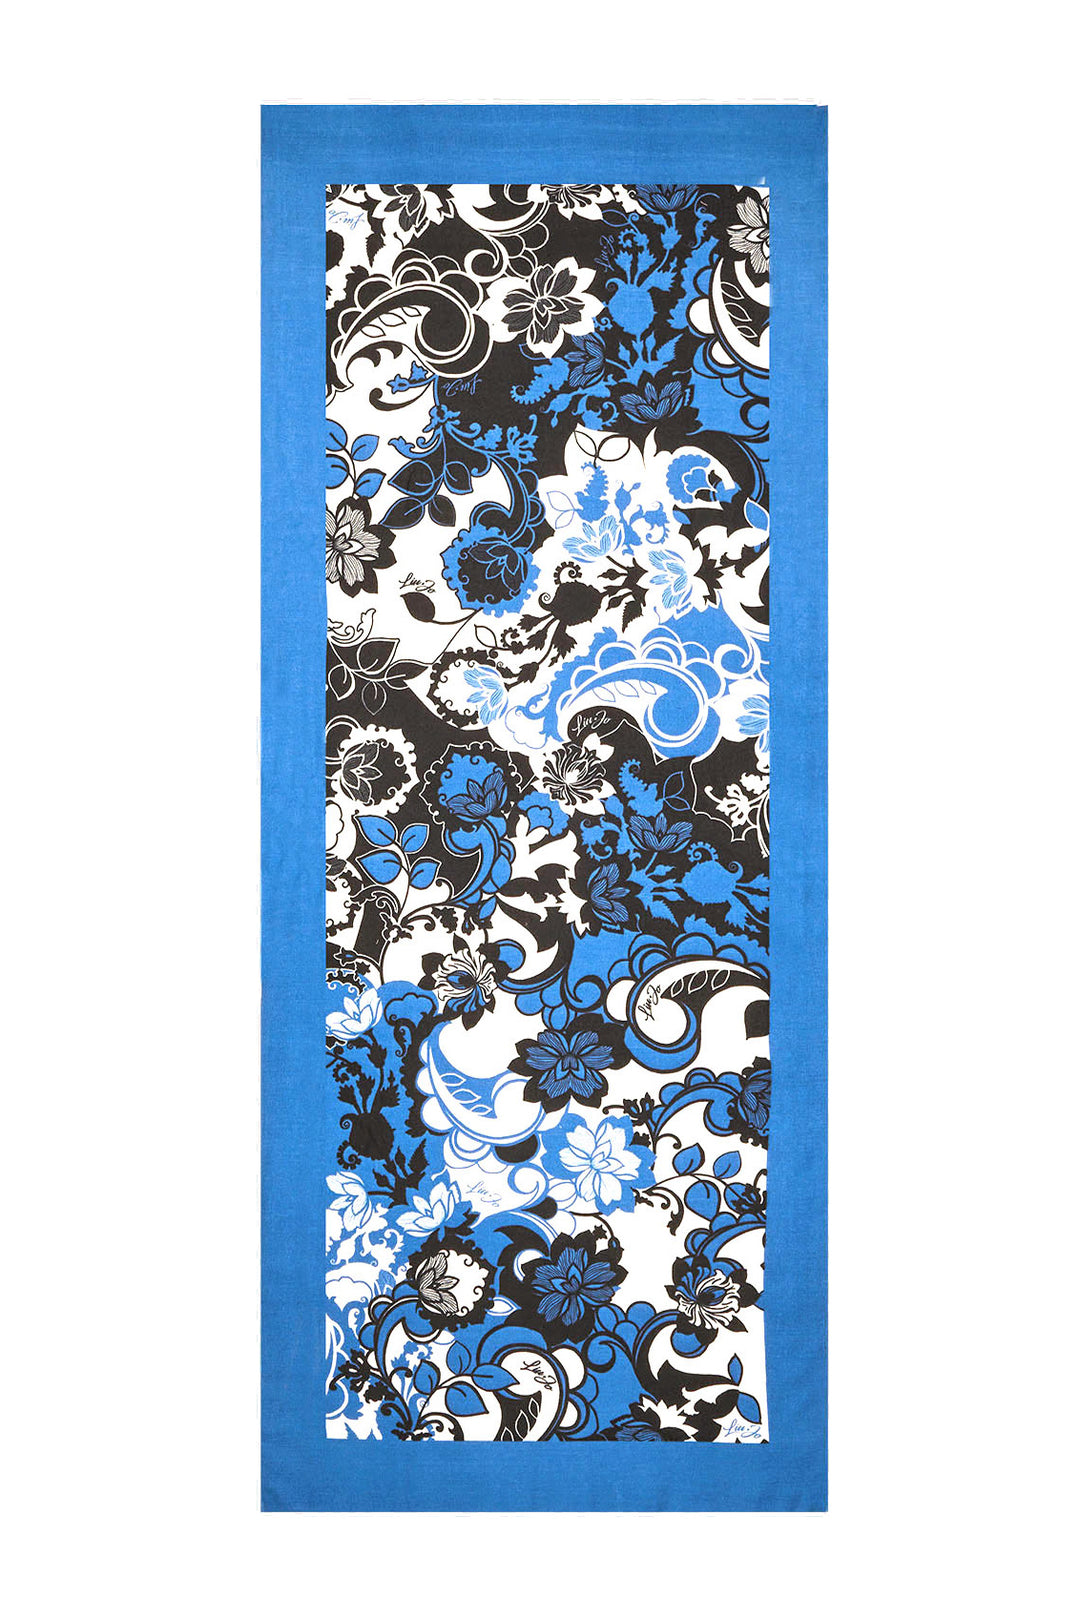 LIU JO Stola blu con stampa paisley floreale - Mancinelli 1954